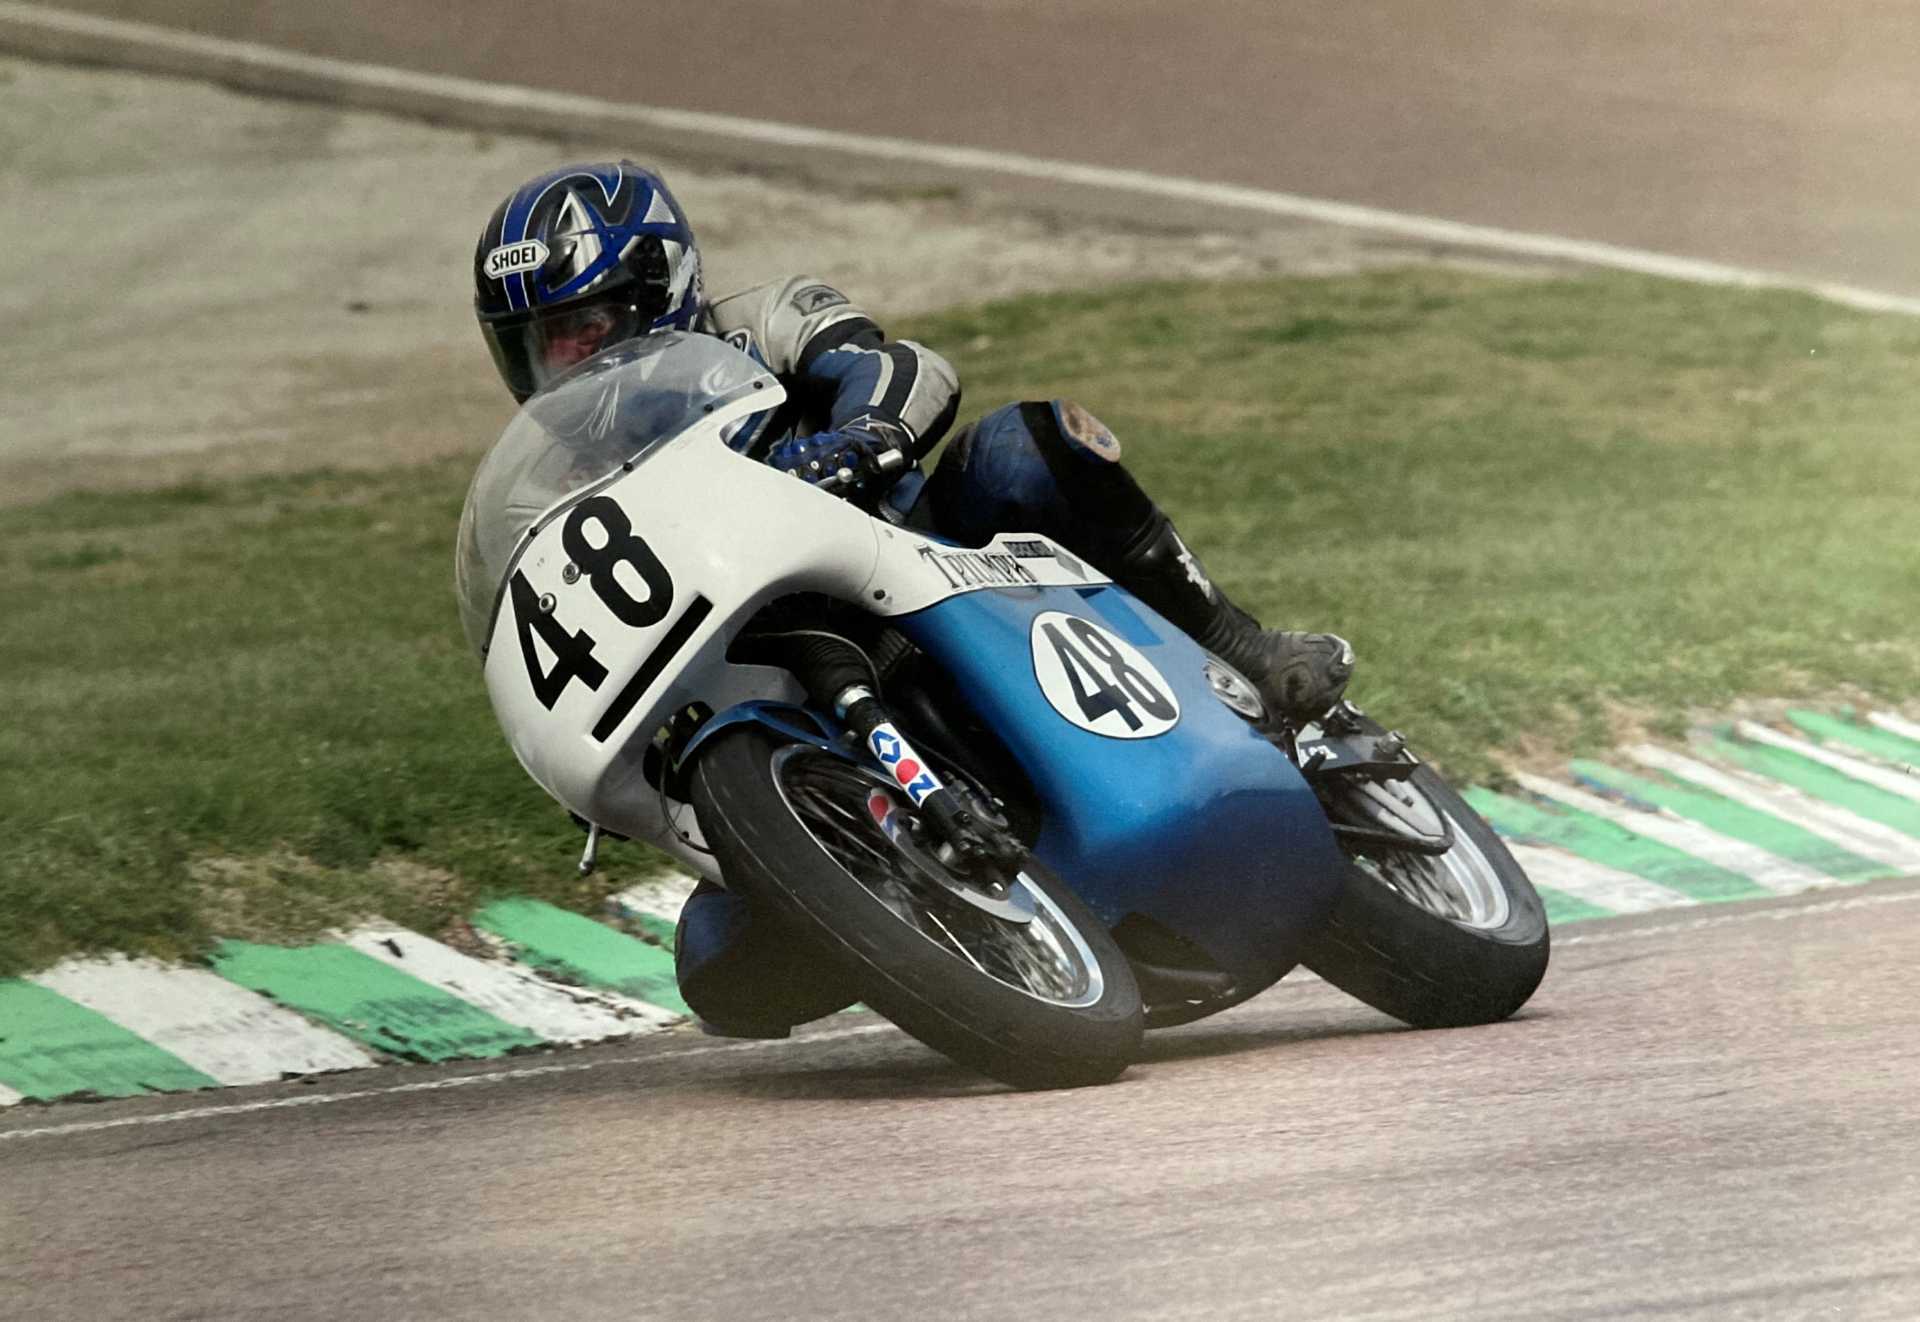 P&M 'Rob North' Triumph T150 racing motorcycle